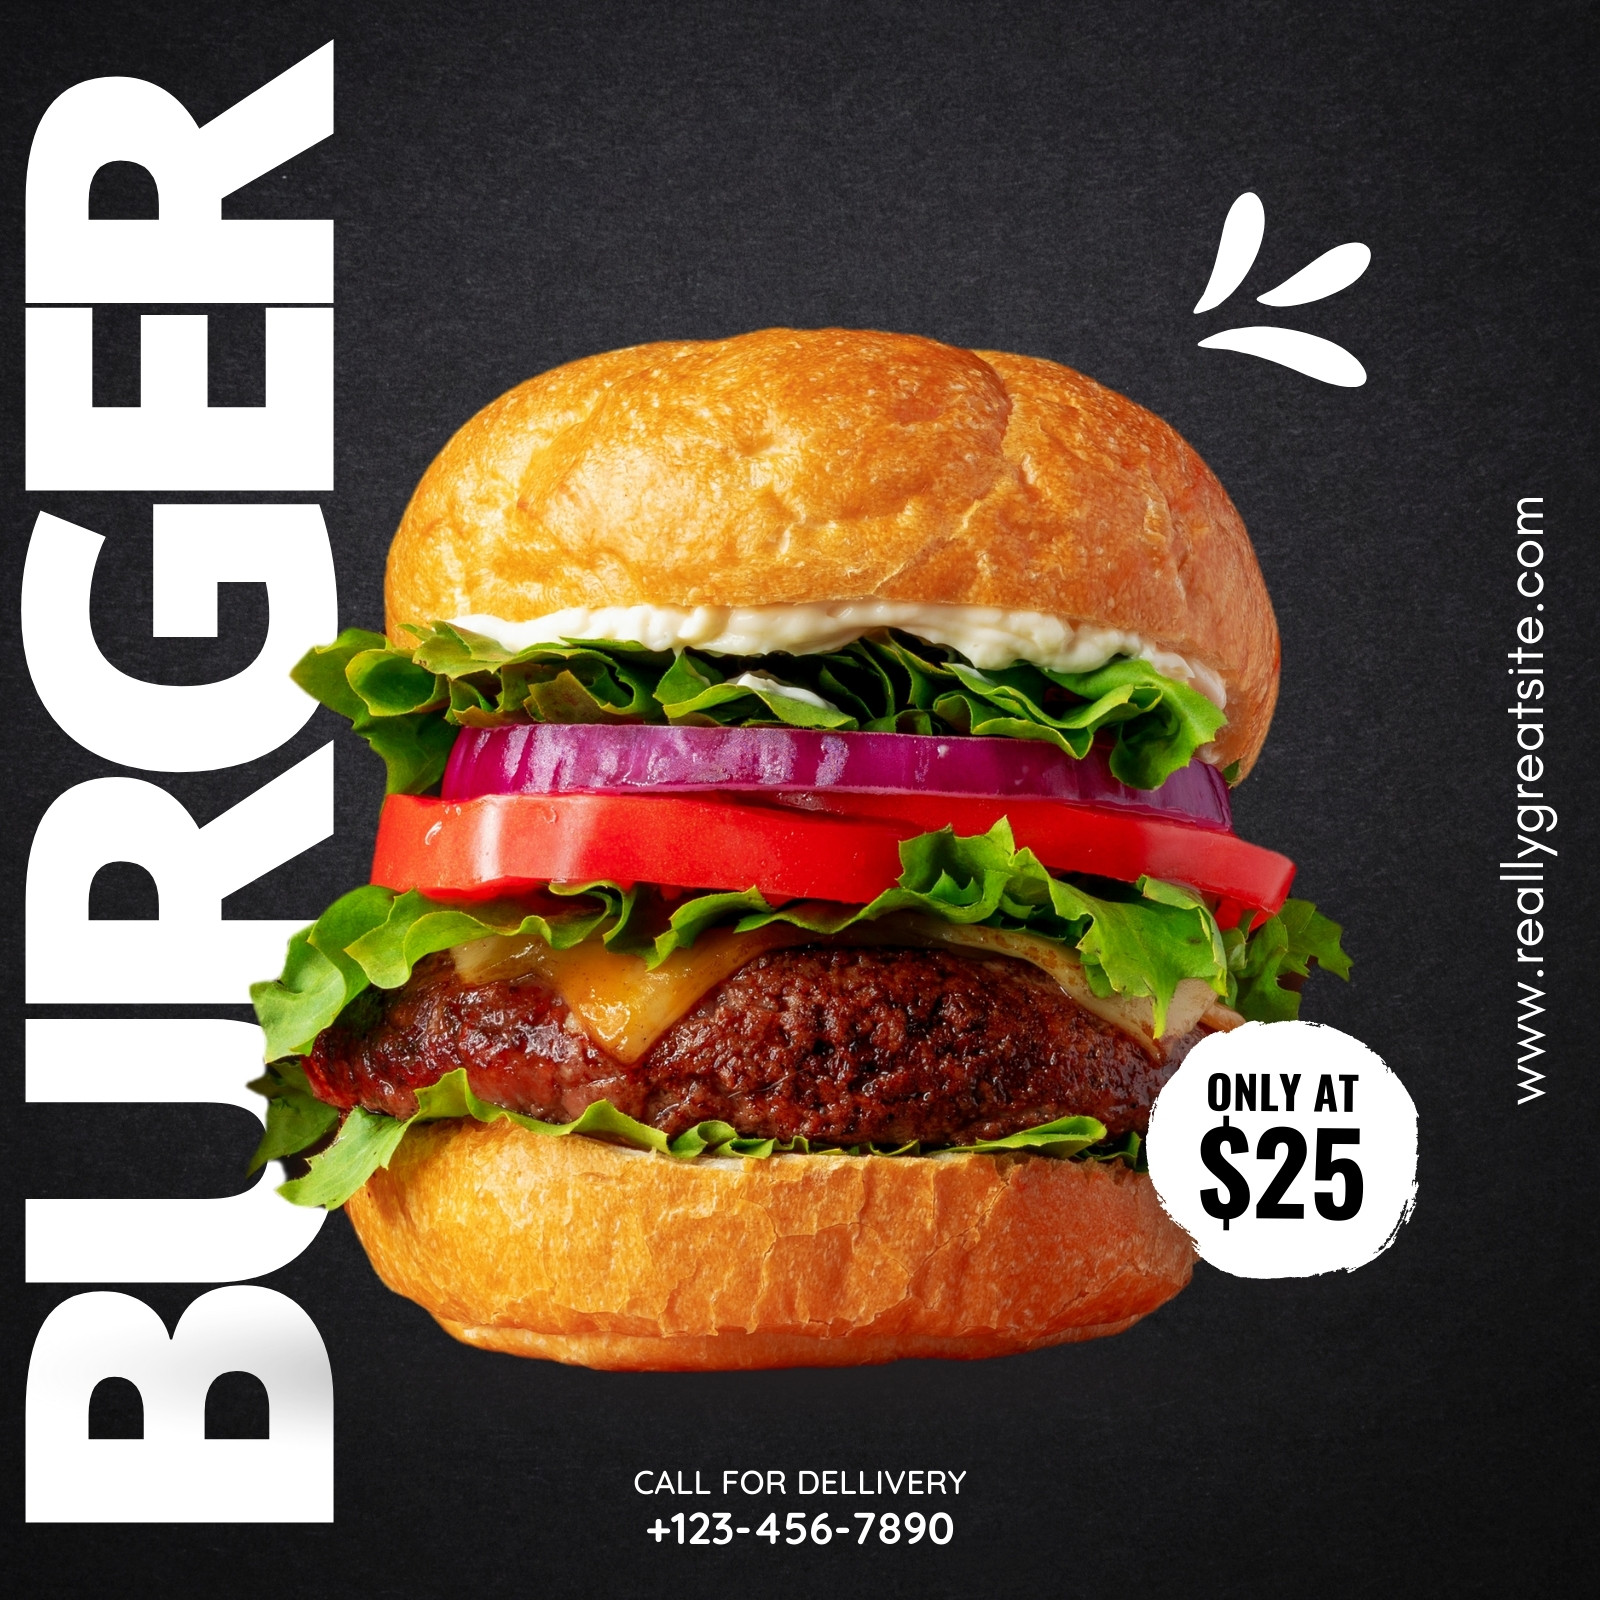 Free and customizable burger templates